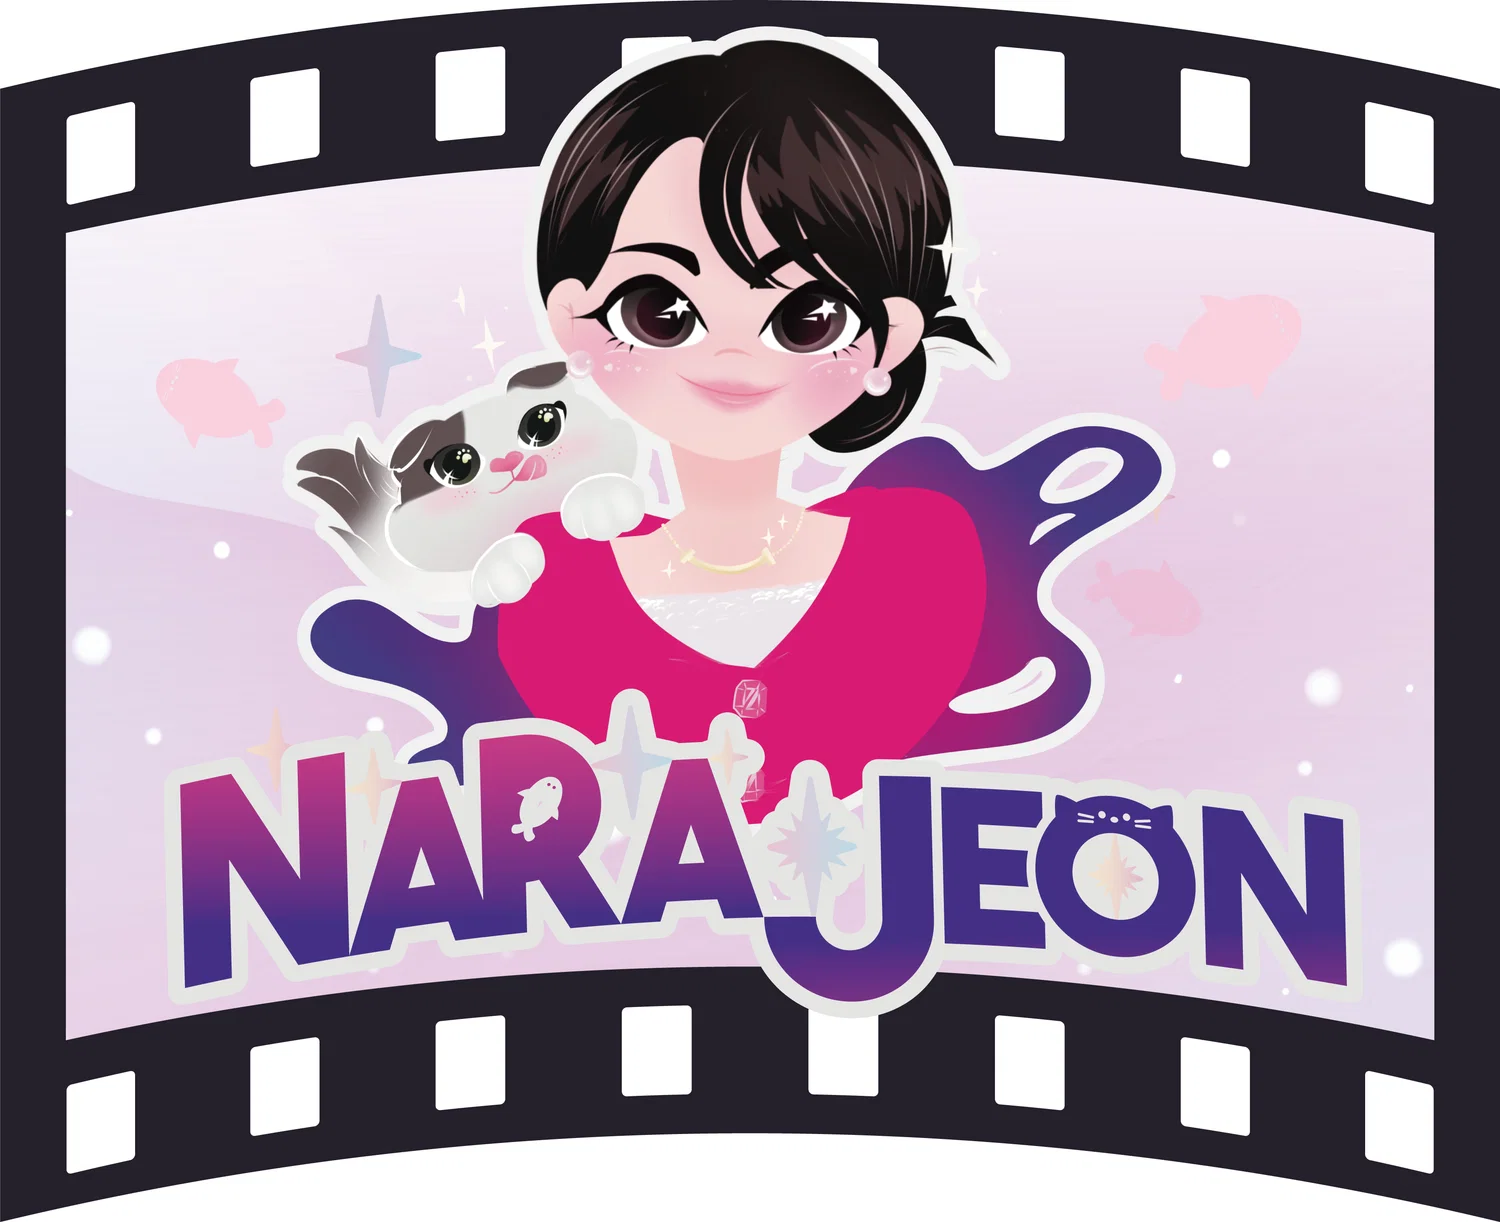 Nara Jeon